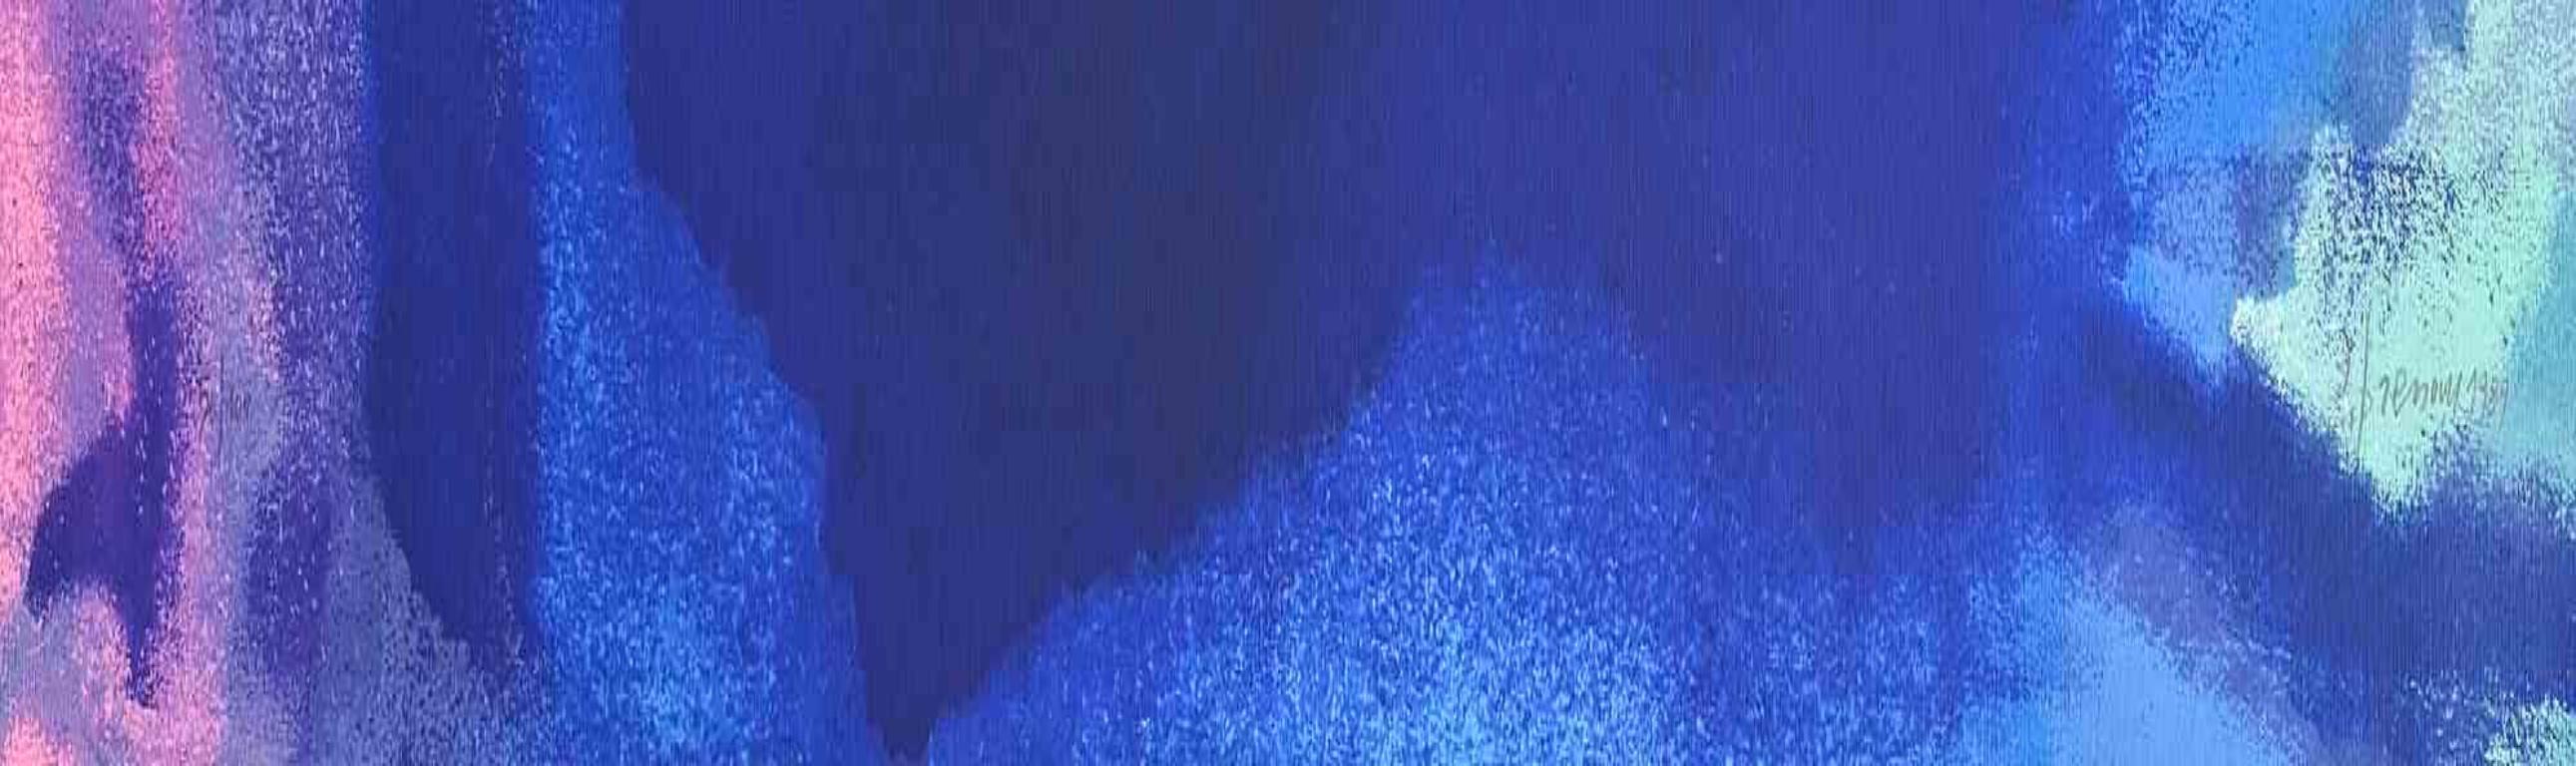 Blue Composition - Original Screen by Italo Bressan - 1989 For Sale 1